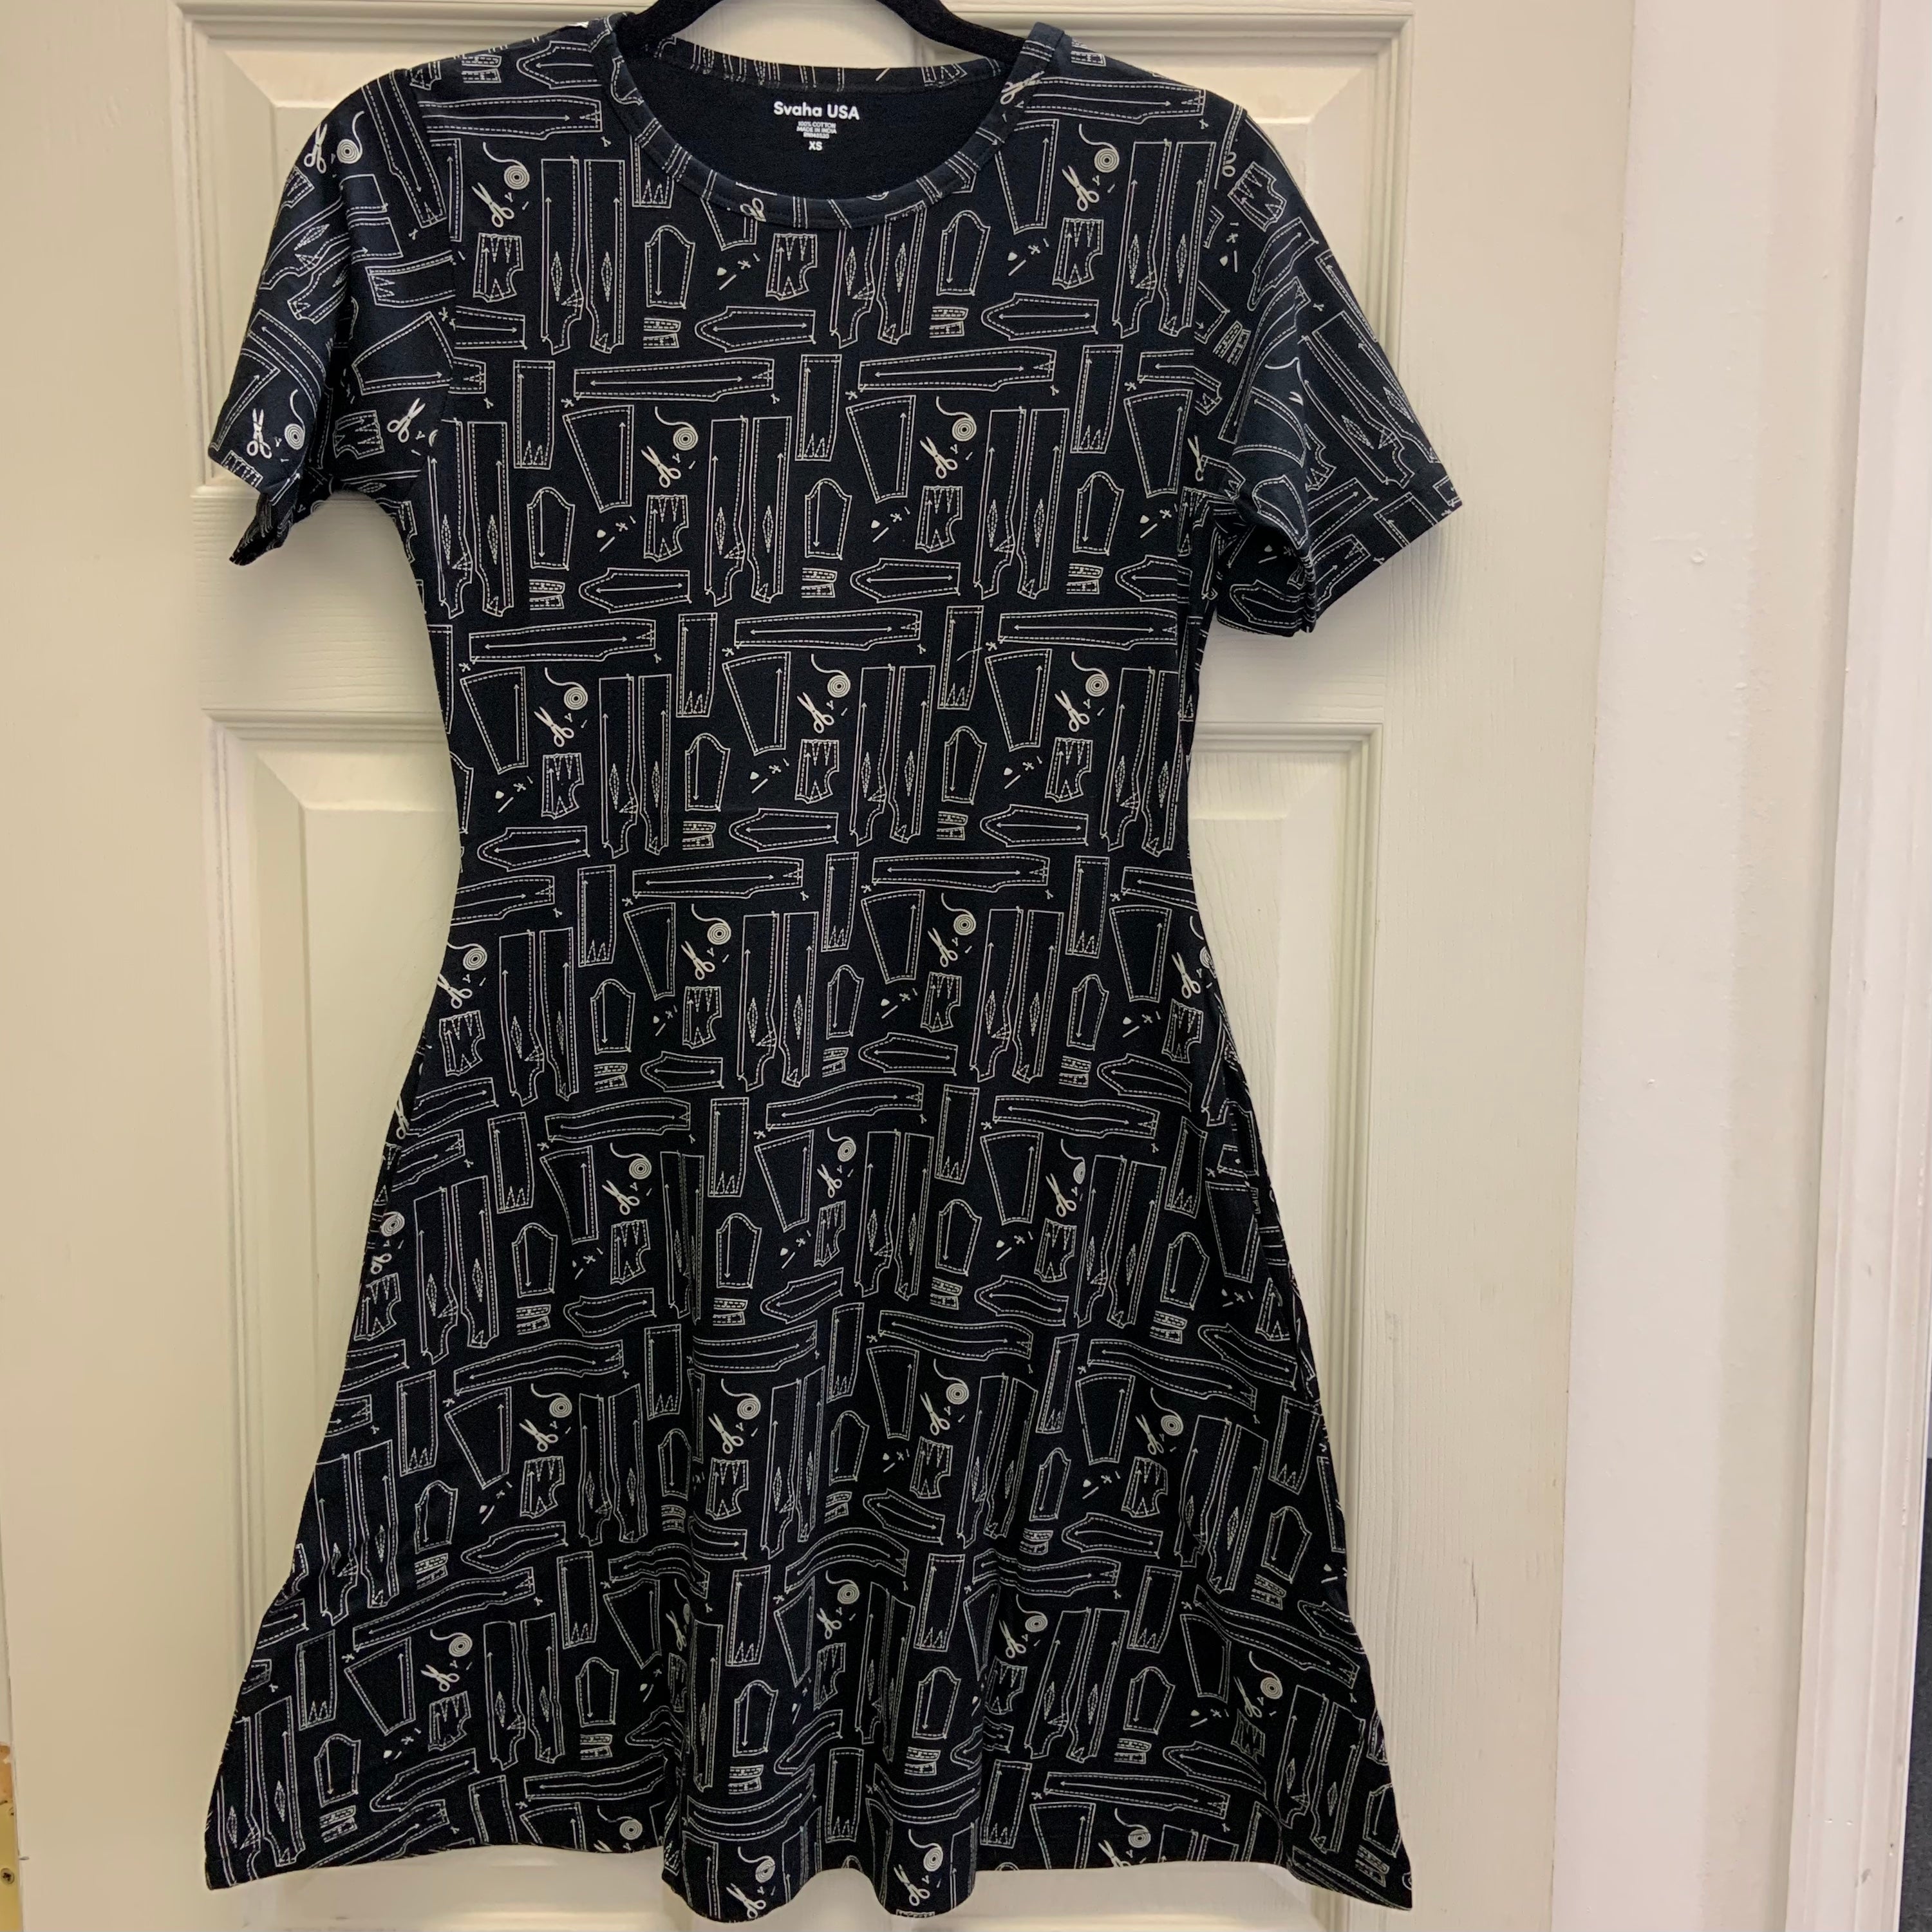 Pattern of Patterns Dress (Incorrect Print)